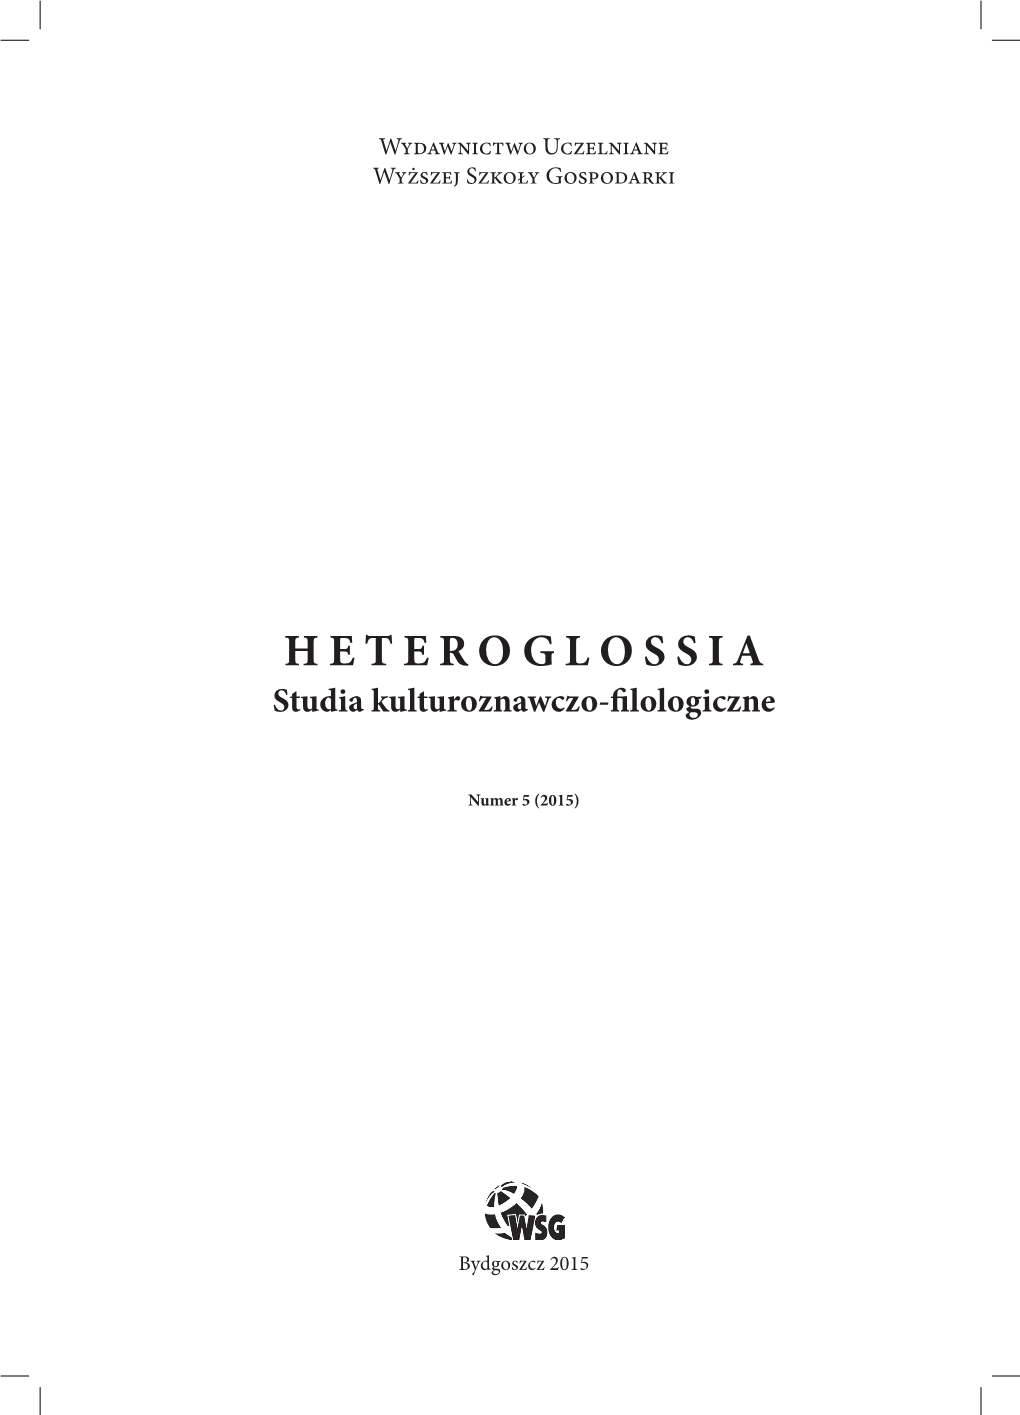 HETEROGLOSSIA Studia Kulturoznawczo-Filologiczne